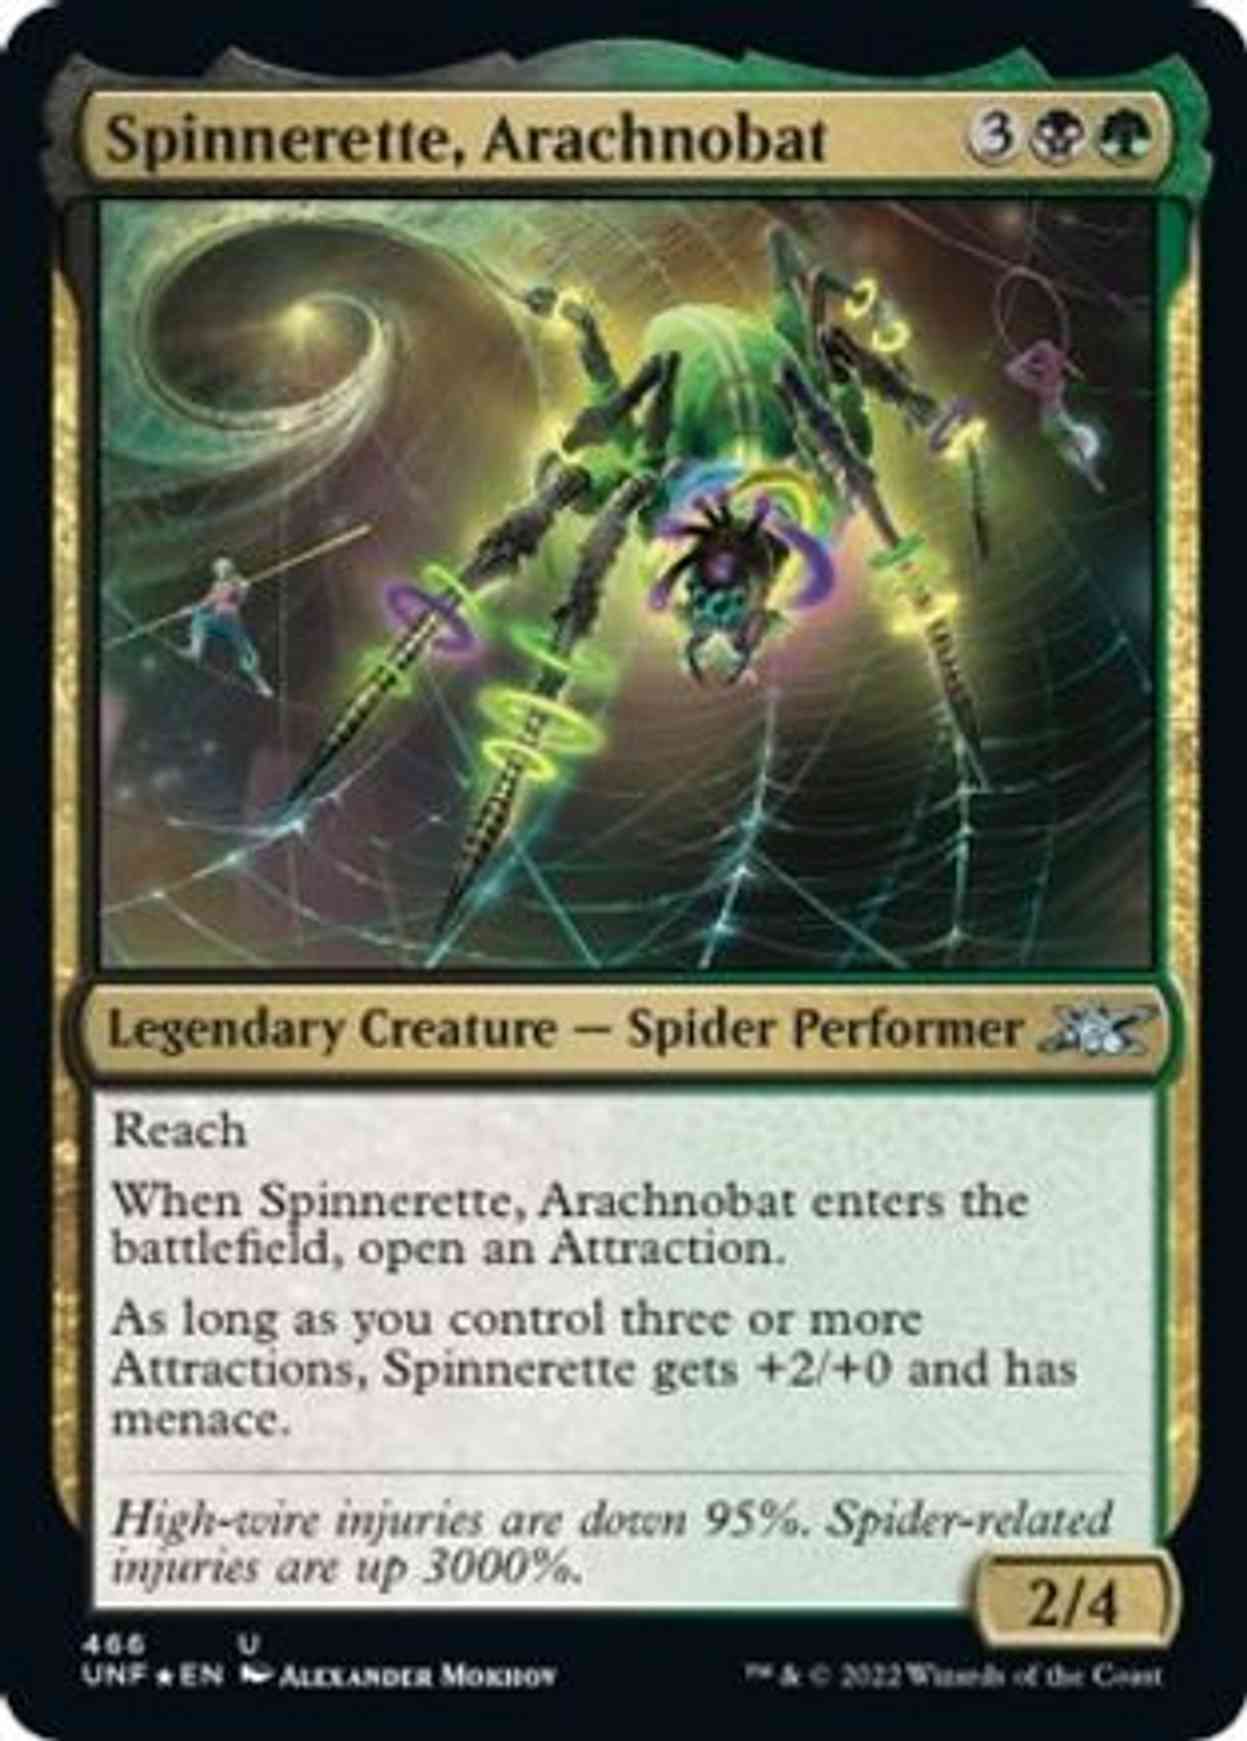 Spinnerette, Arachnobat (Galaxy Foil) magic card front